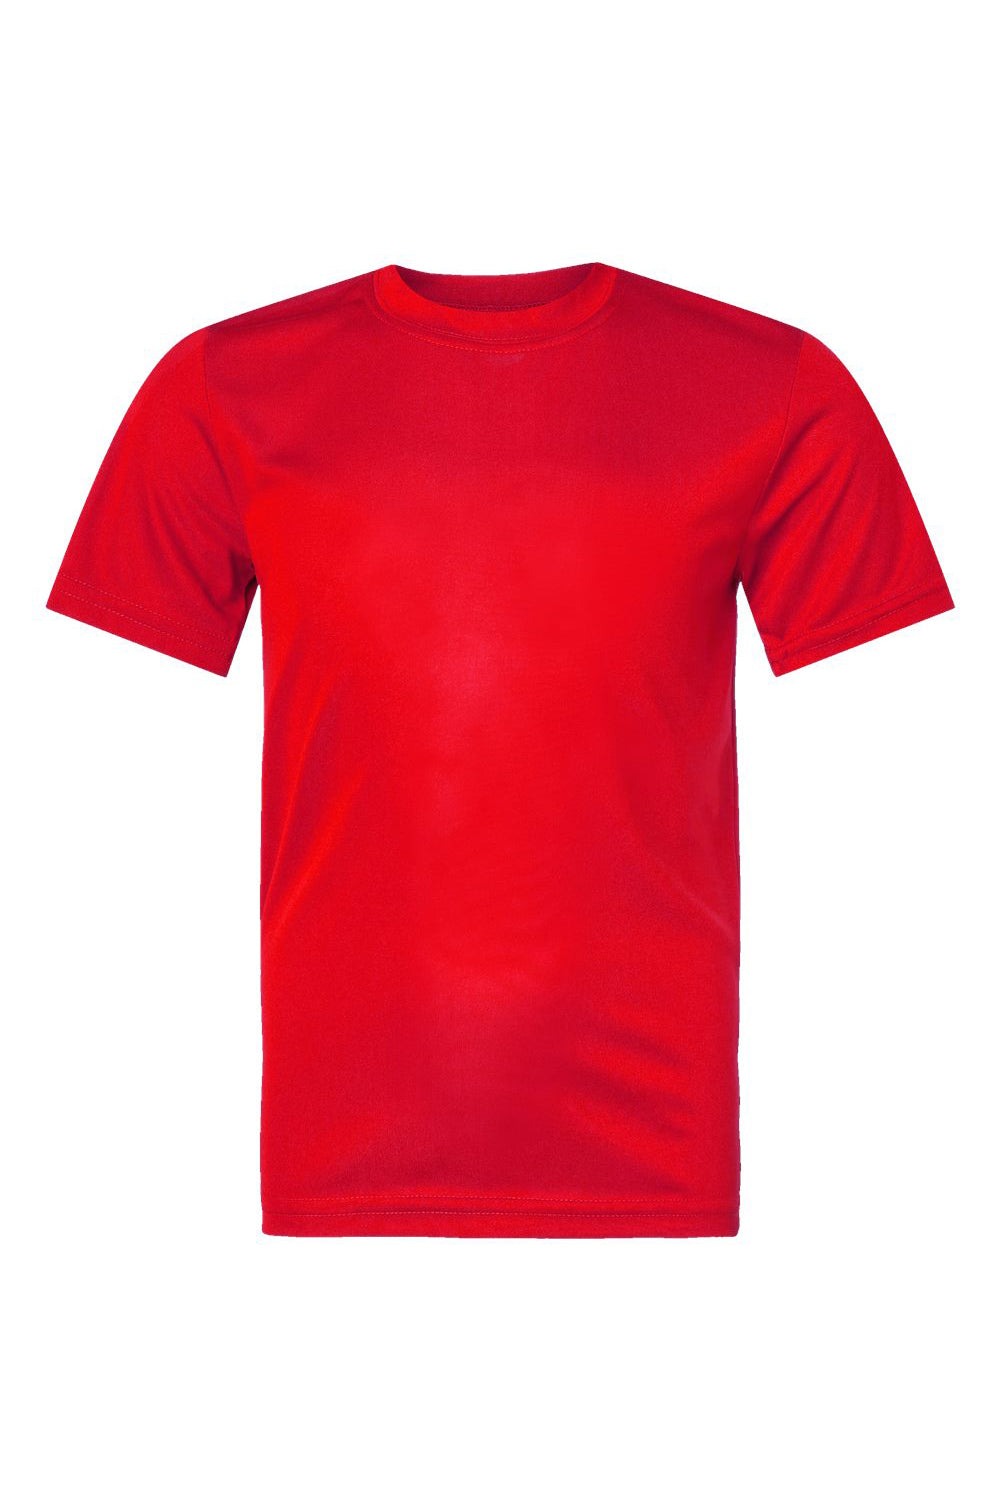 Augusta Sportswear 791 Youth Nexgen Moisture Wicking Short Sleeve Crewneck T-Shirt Scarlet Red Flat Front